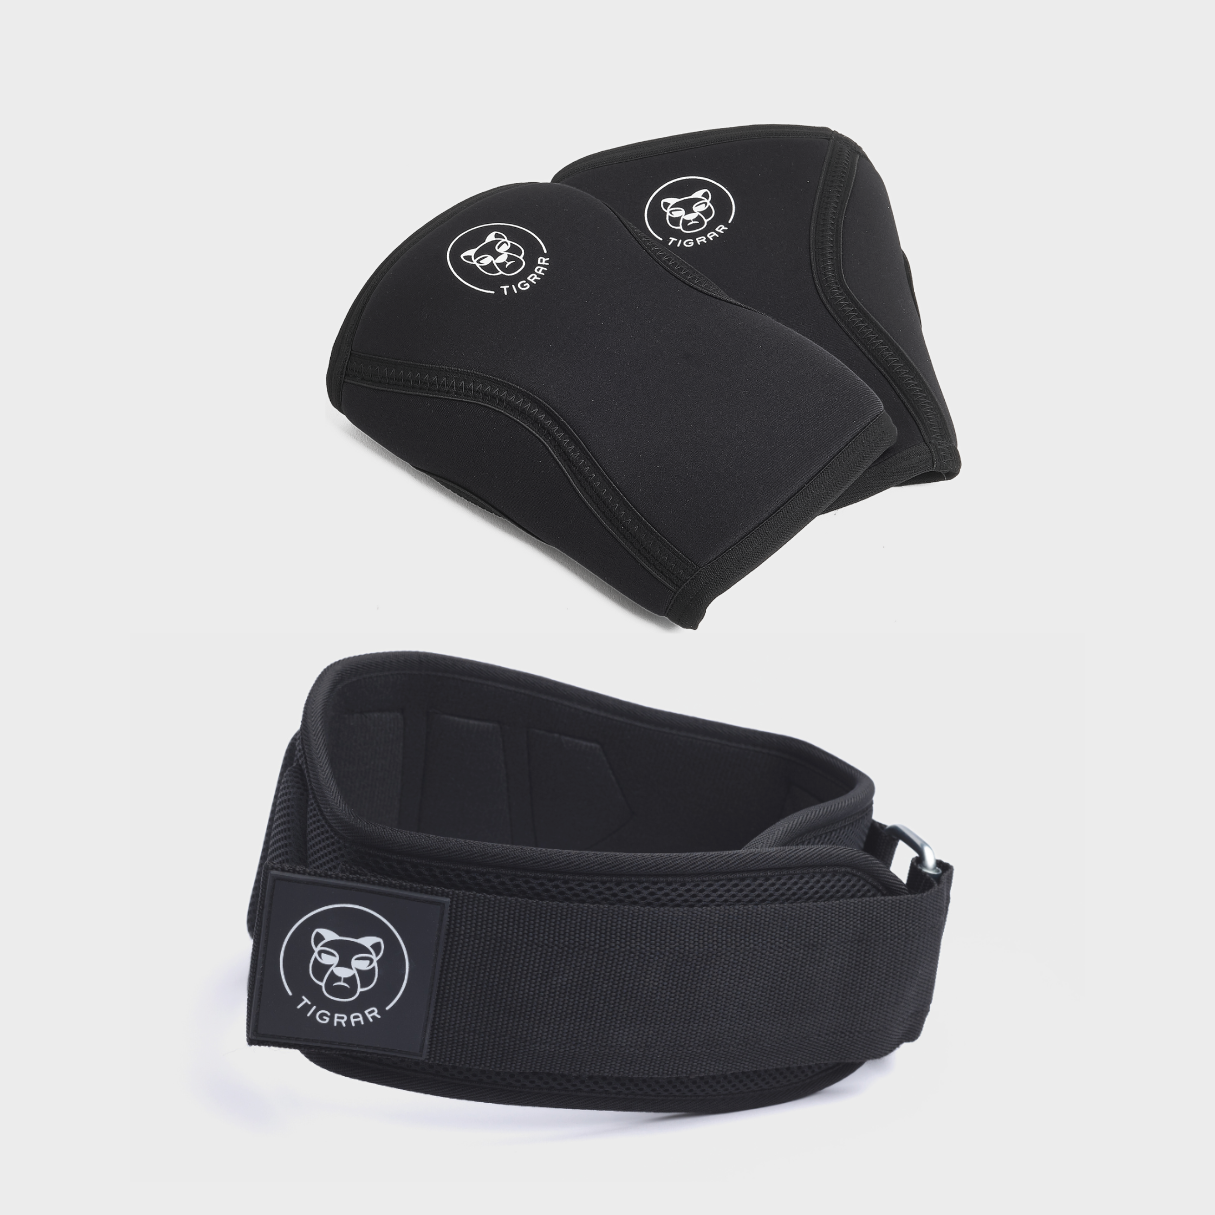 Crossfit uitrusting bundels van Tigrar, featuring neopreen knee sleeves en velcro lifting belt, ideaal voor elke workout.